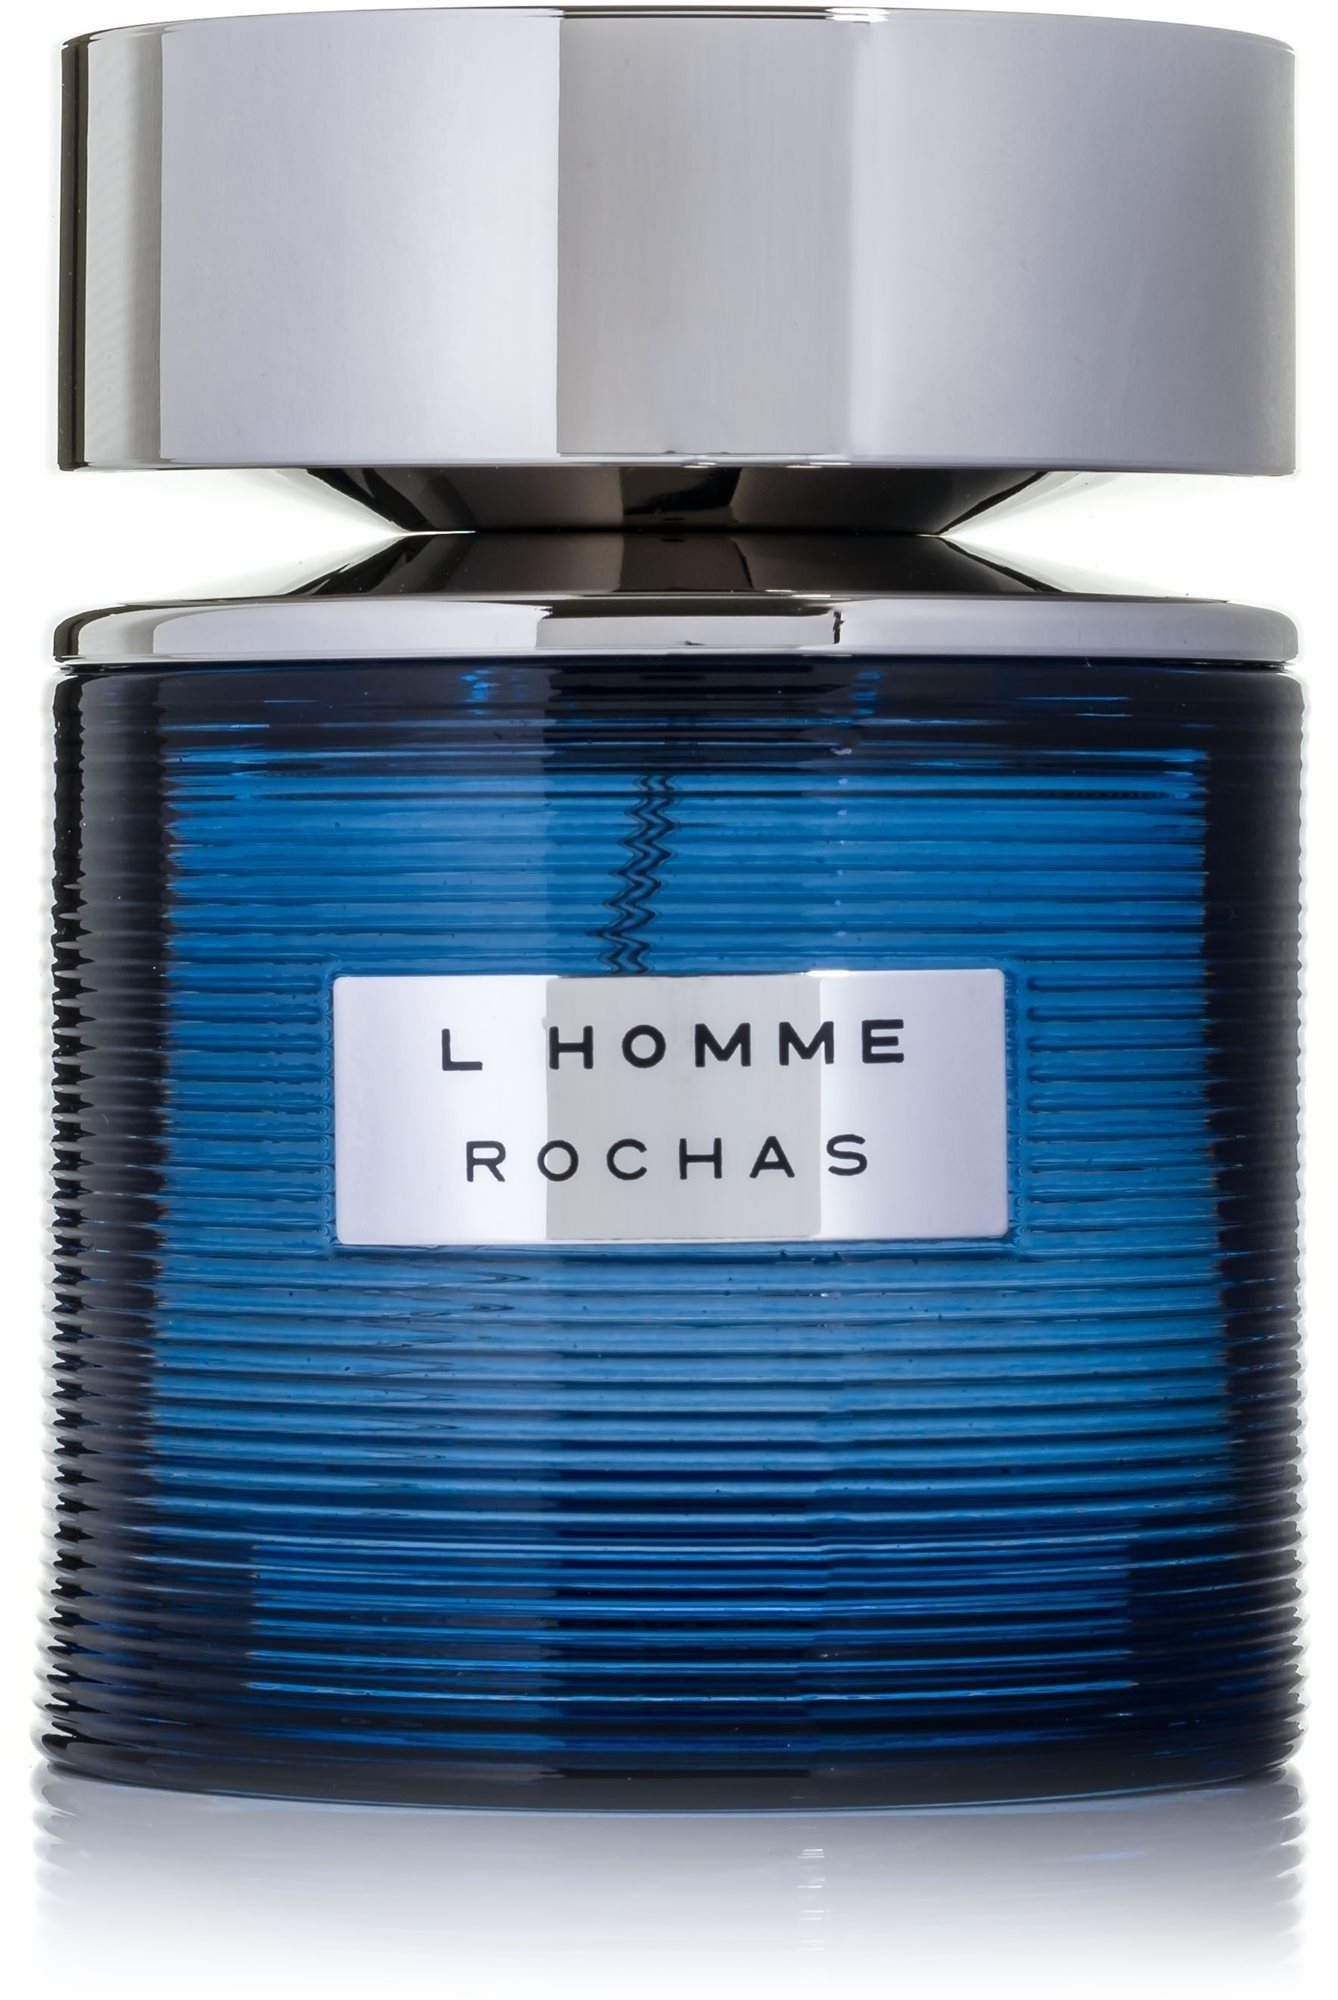 ROCHAS L'Homme EdT 100 ml